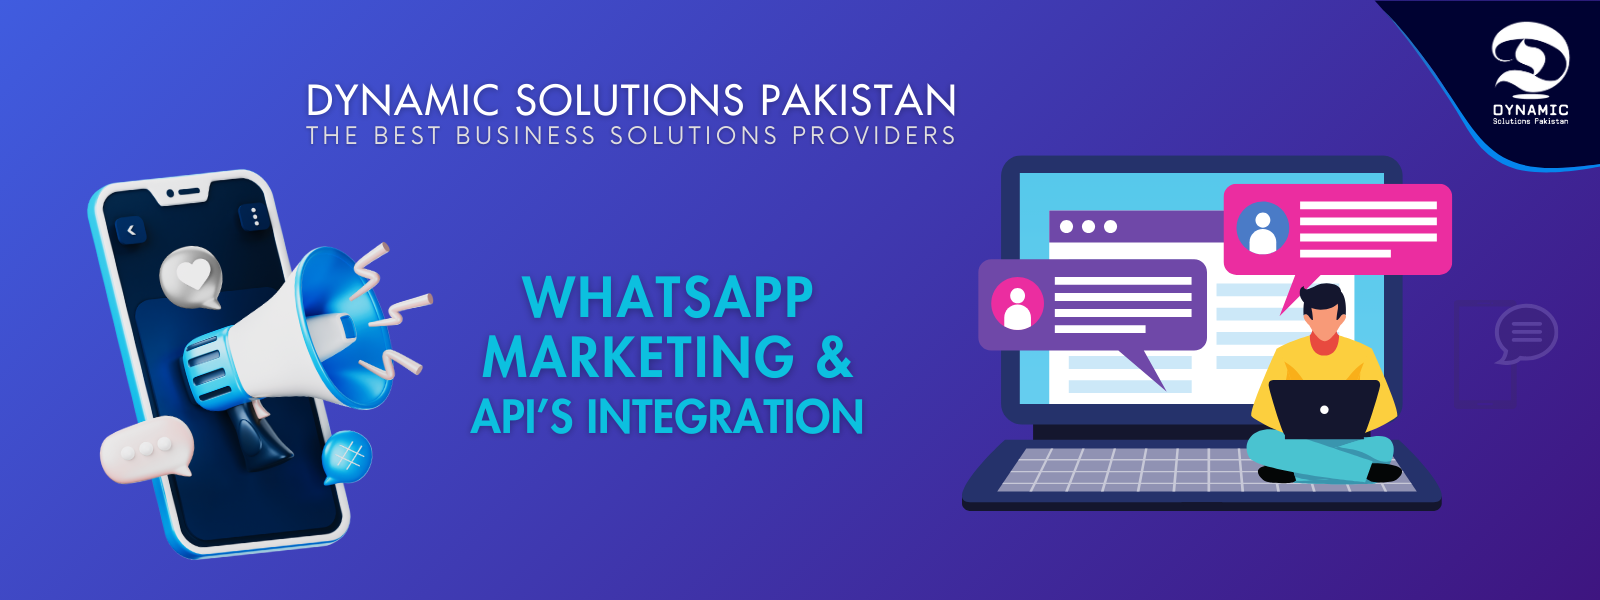 WhatsApp Marketing & Api's Integration